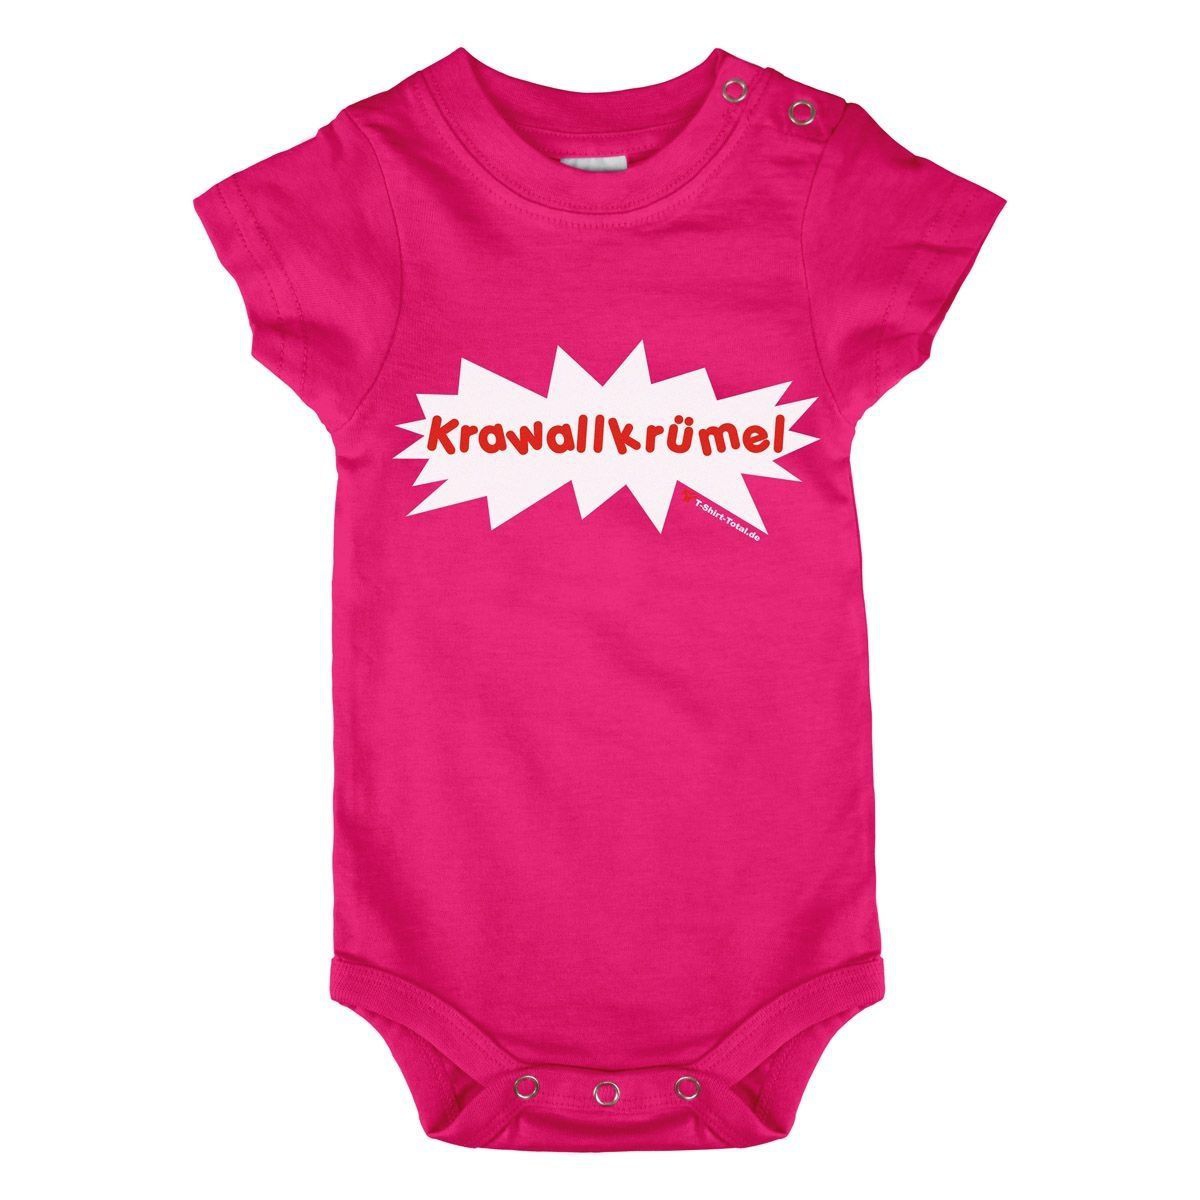 Krawallkrümel Baby Body Kurzarm pink 68 / 74